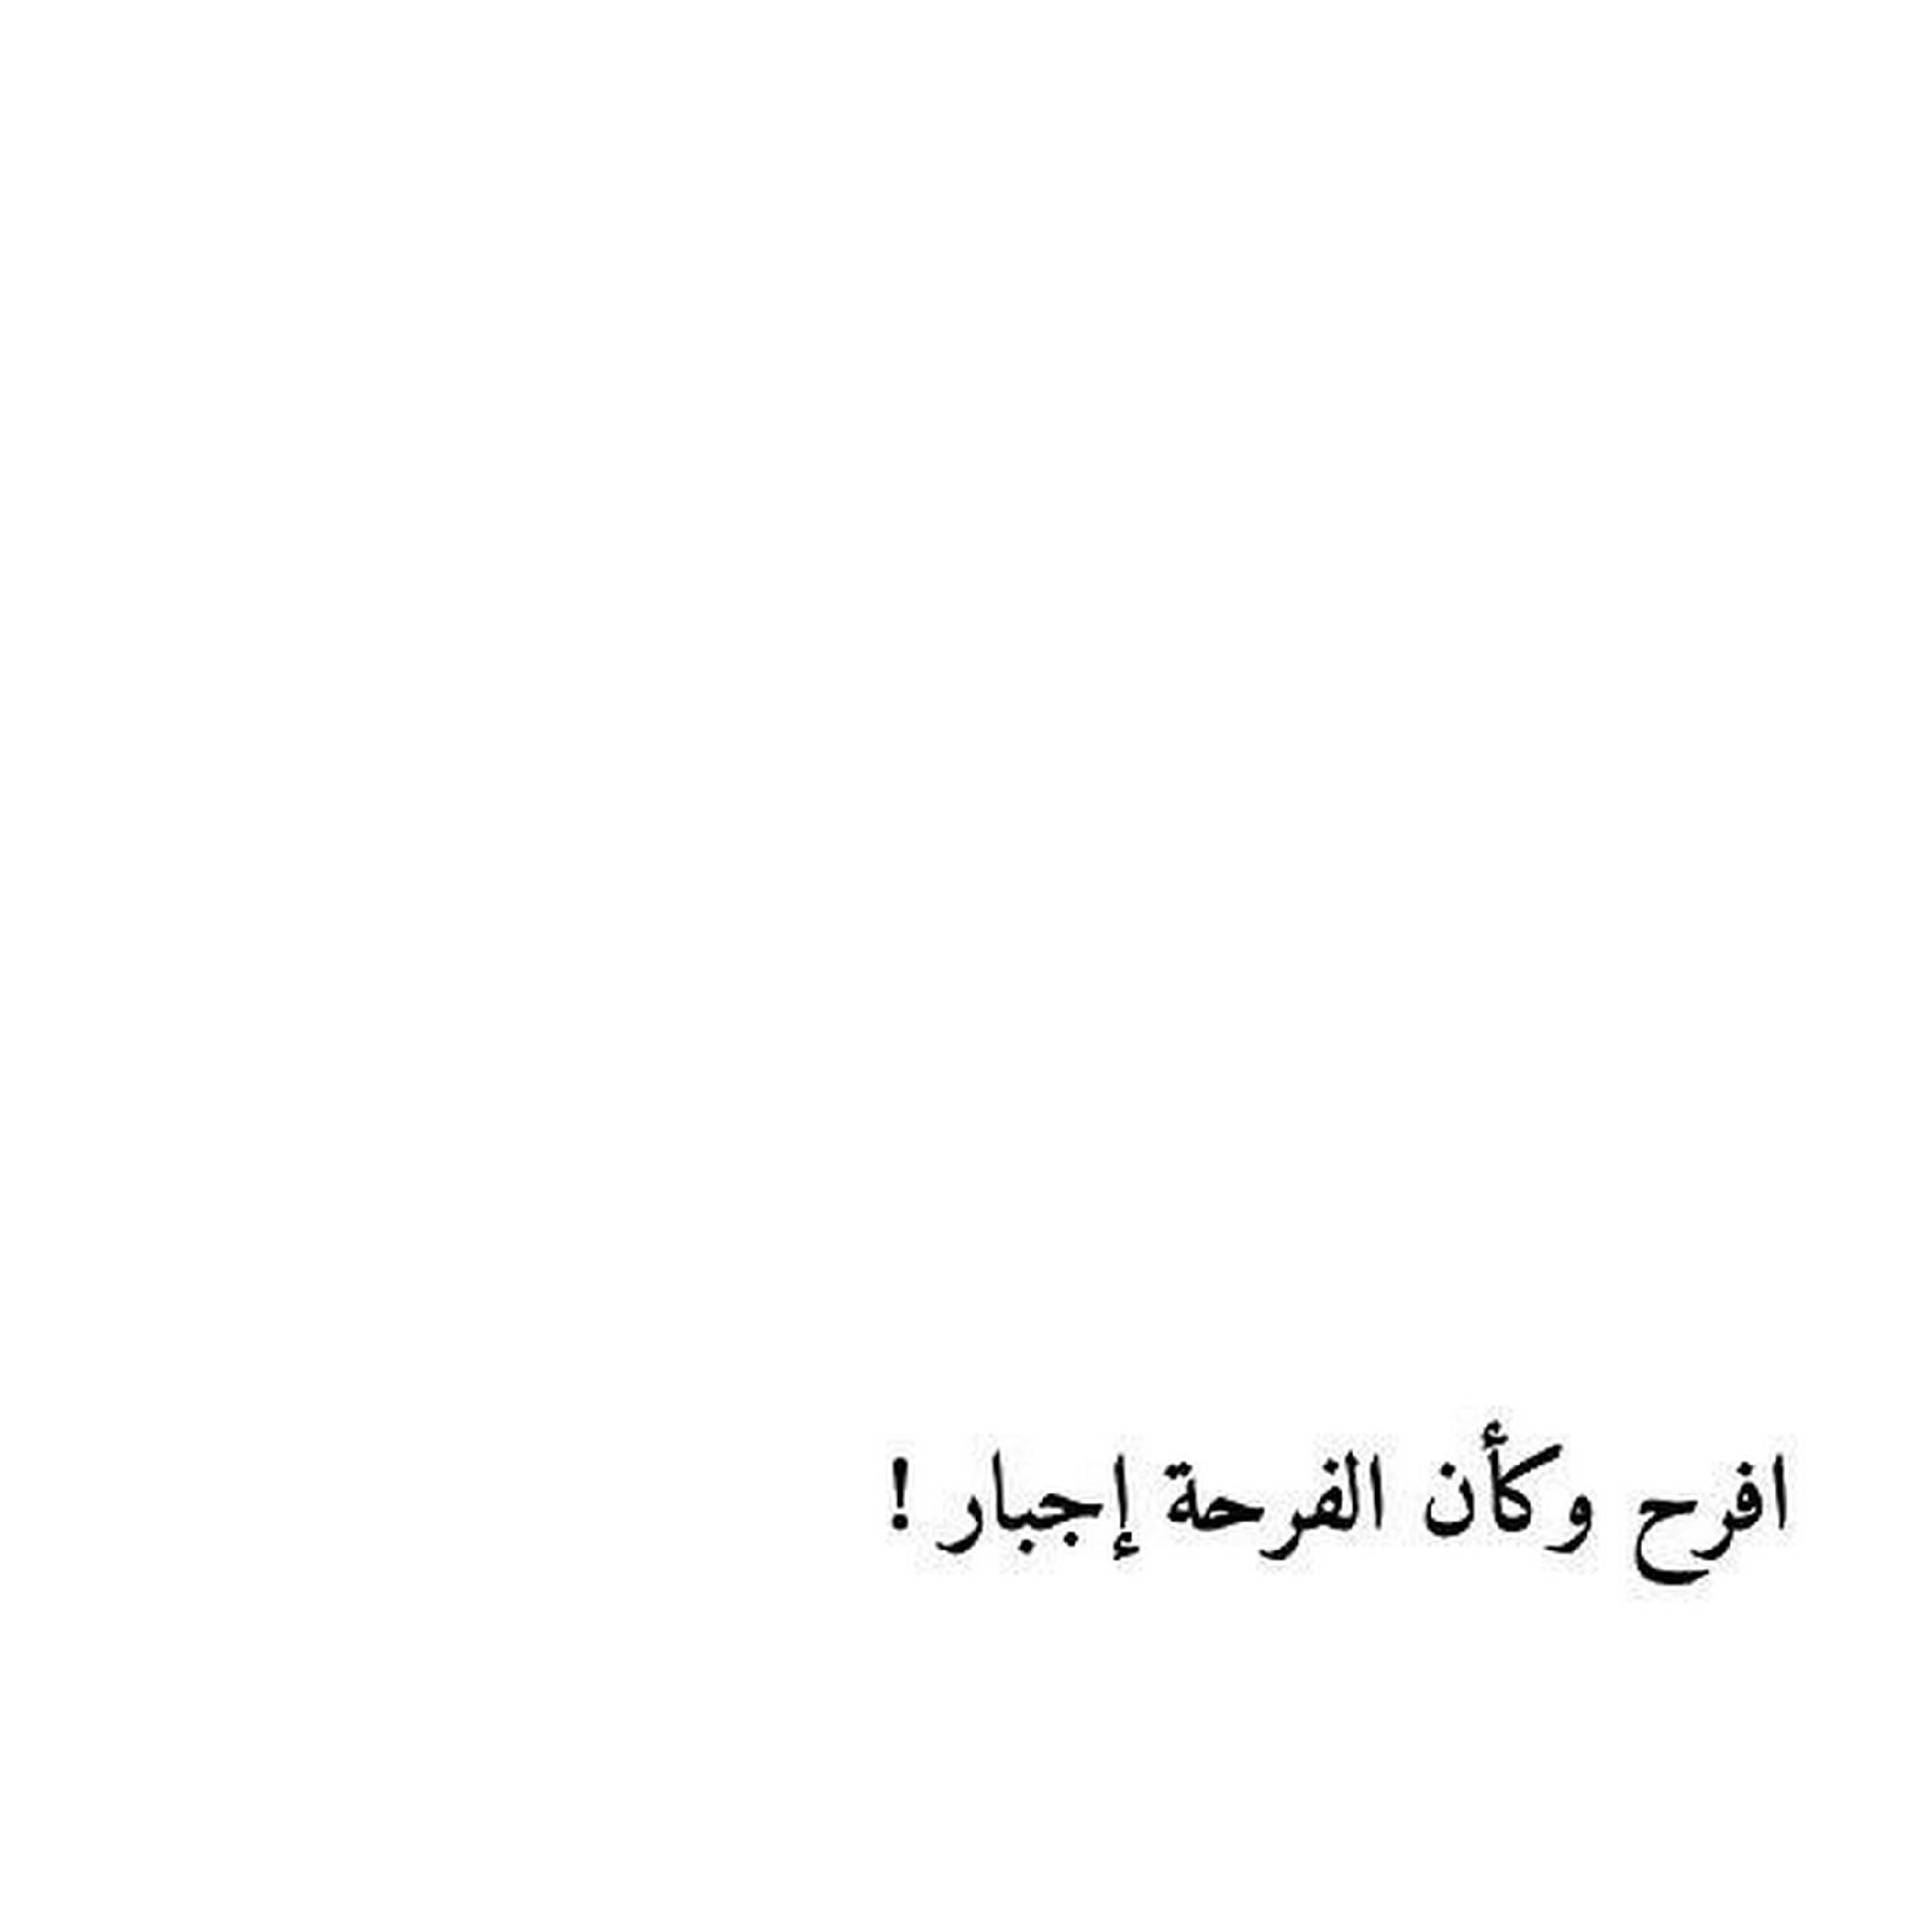 Blank White Arabic Text Background